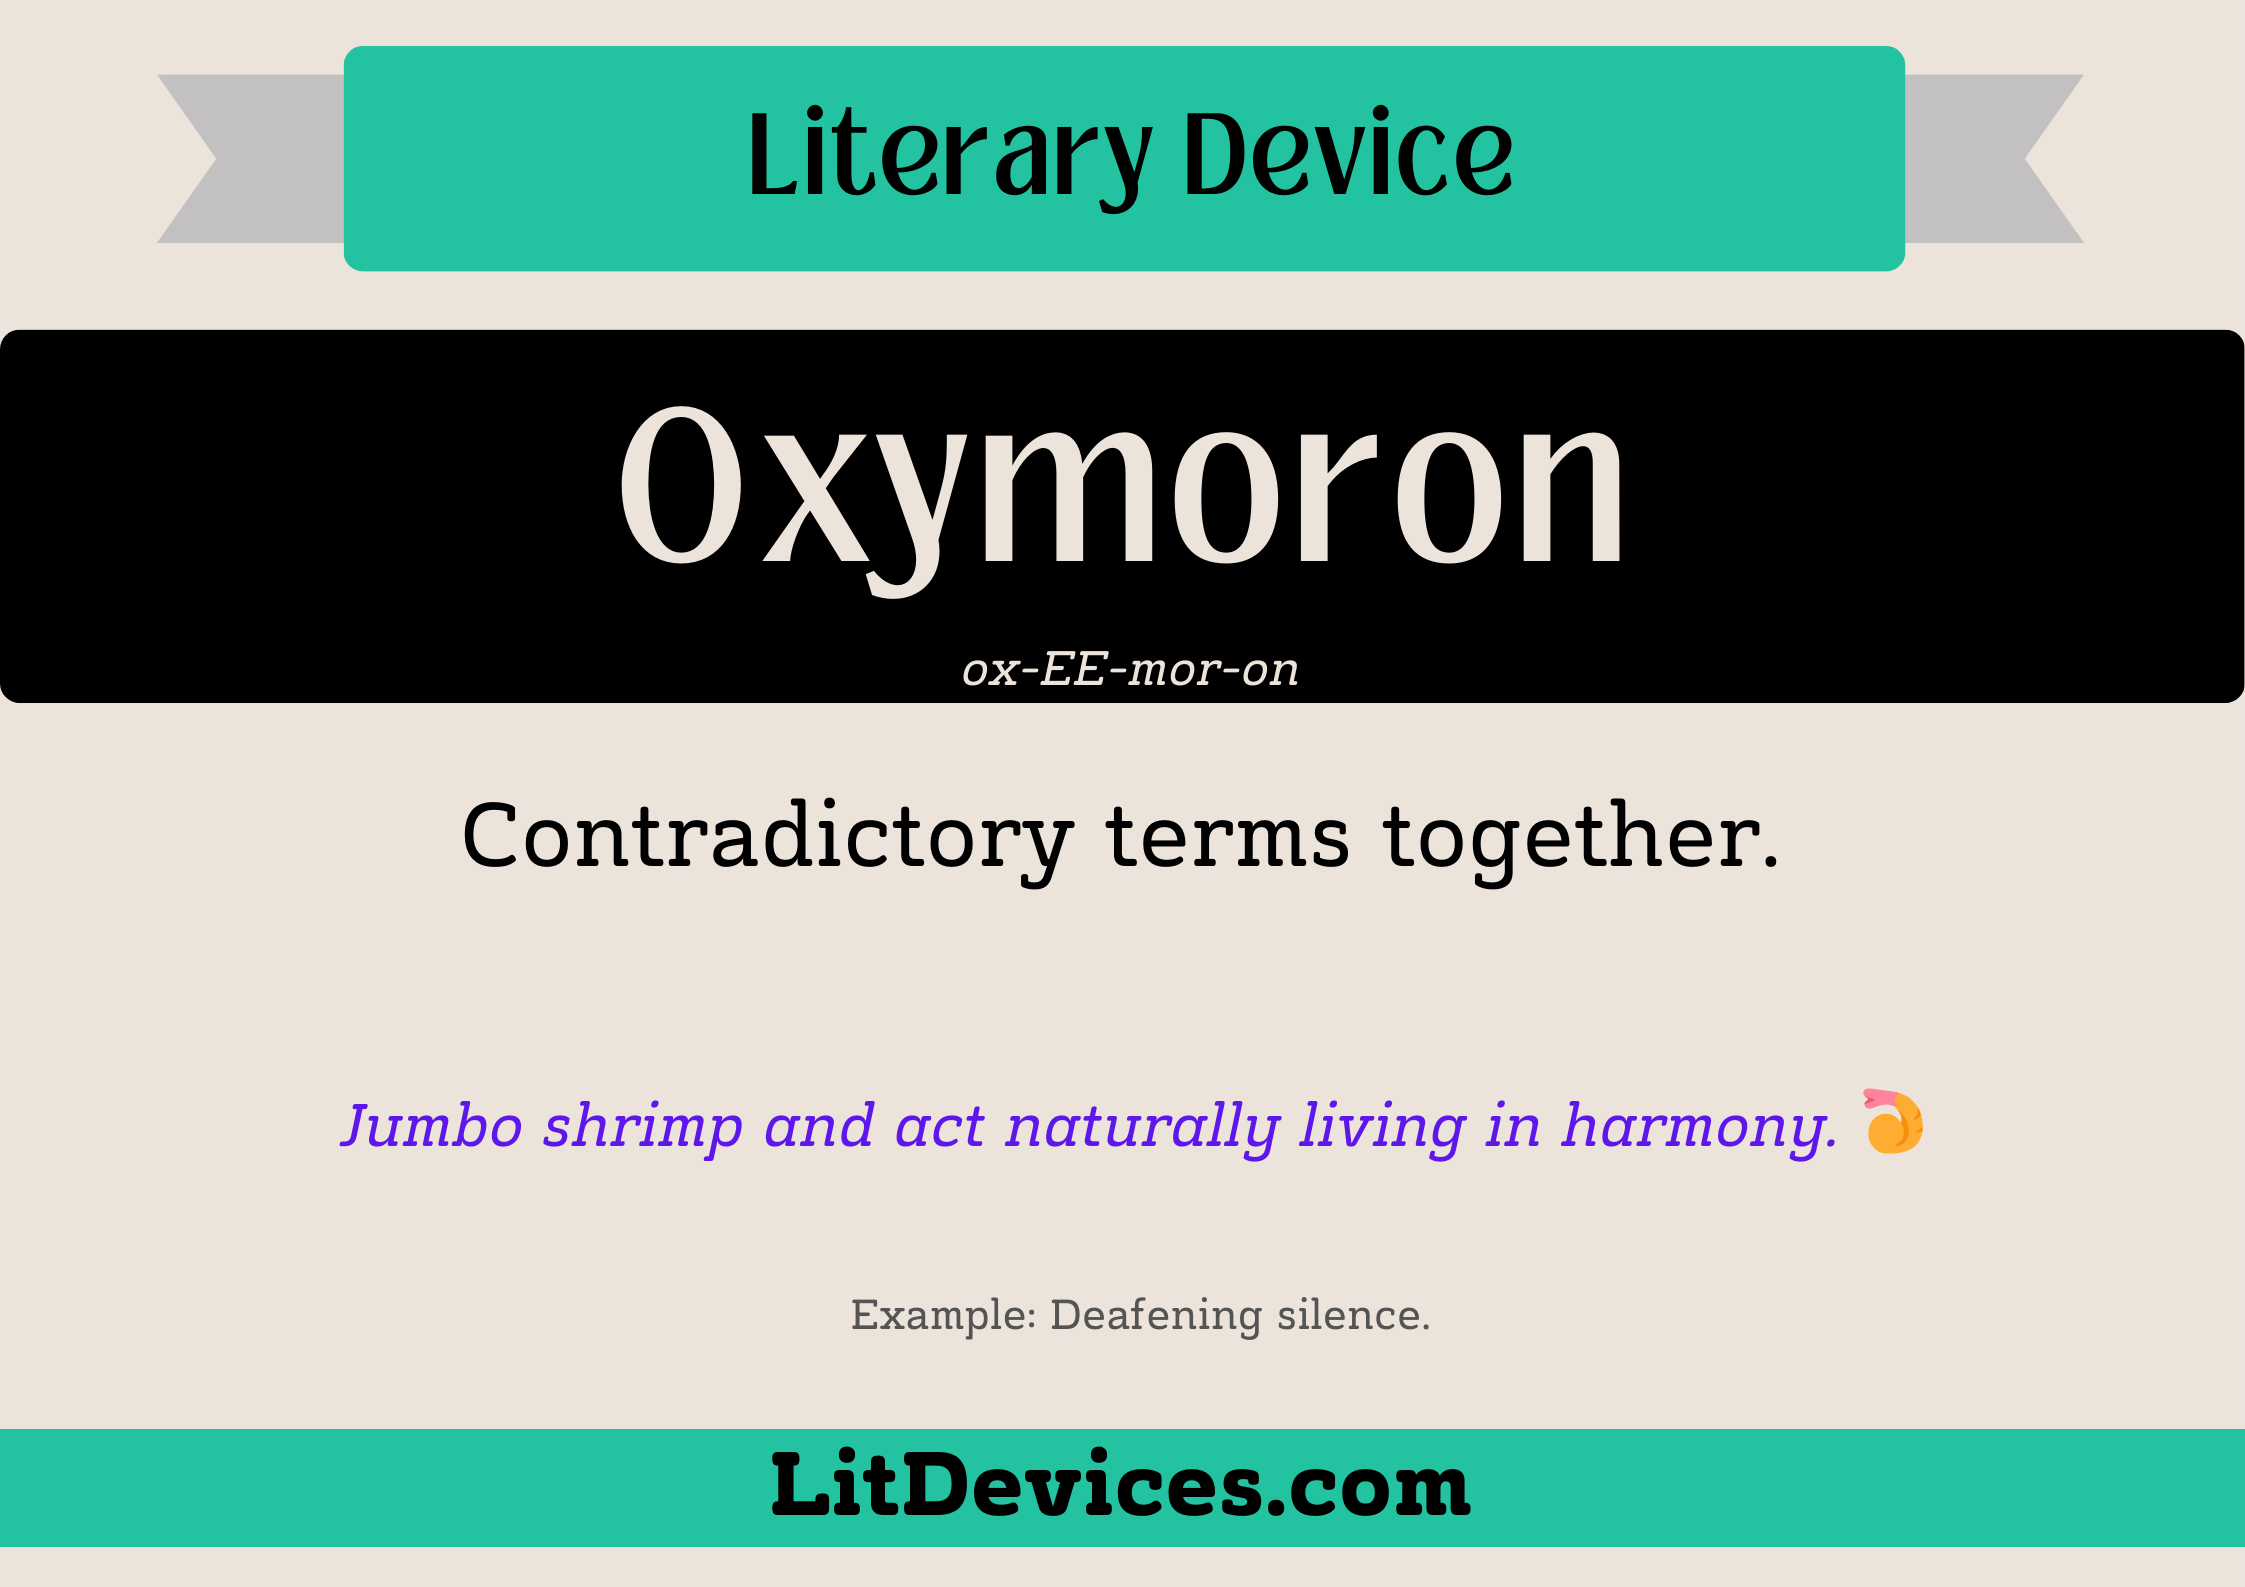 oxymoron literary device